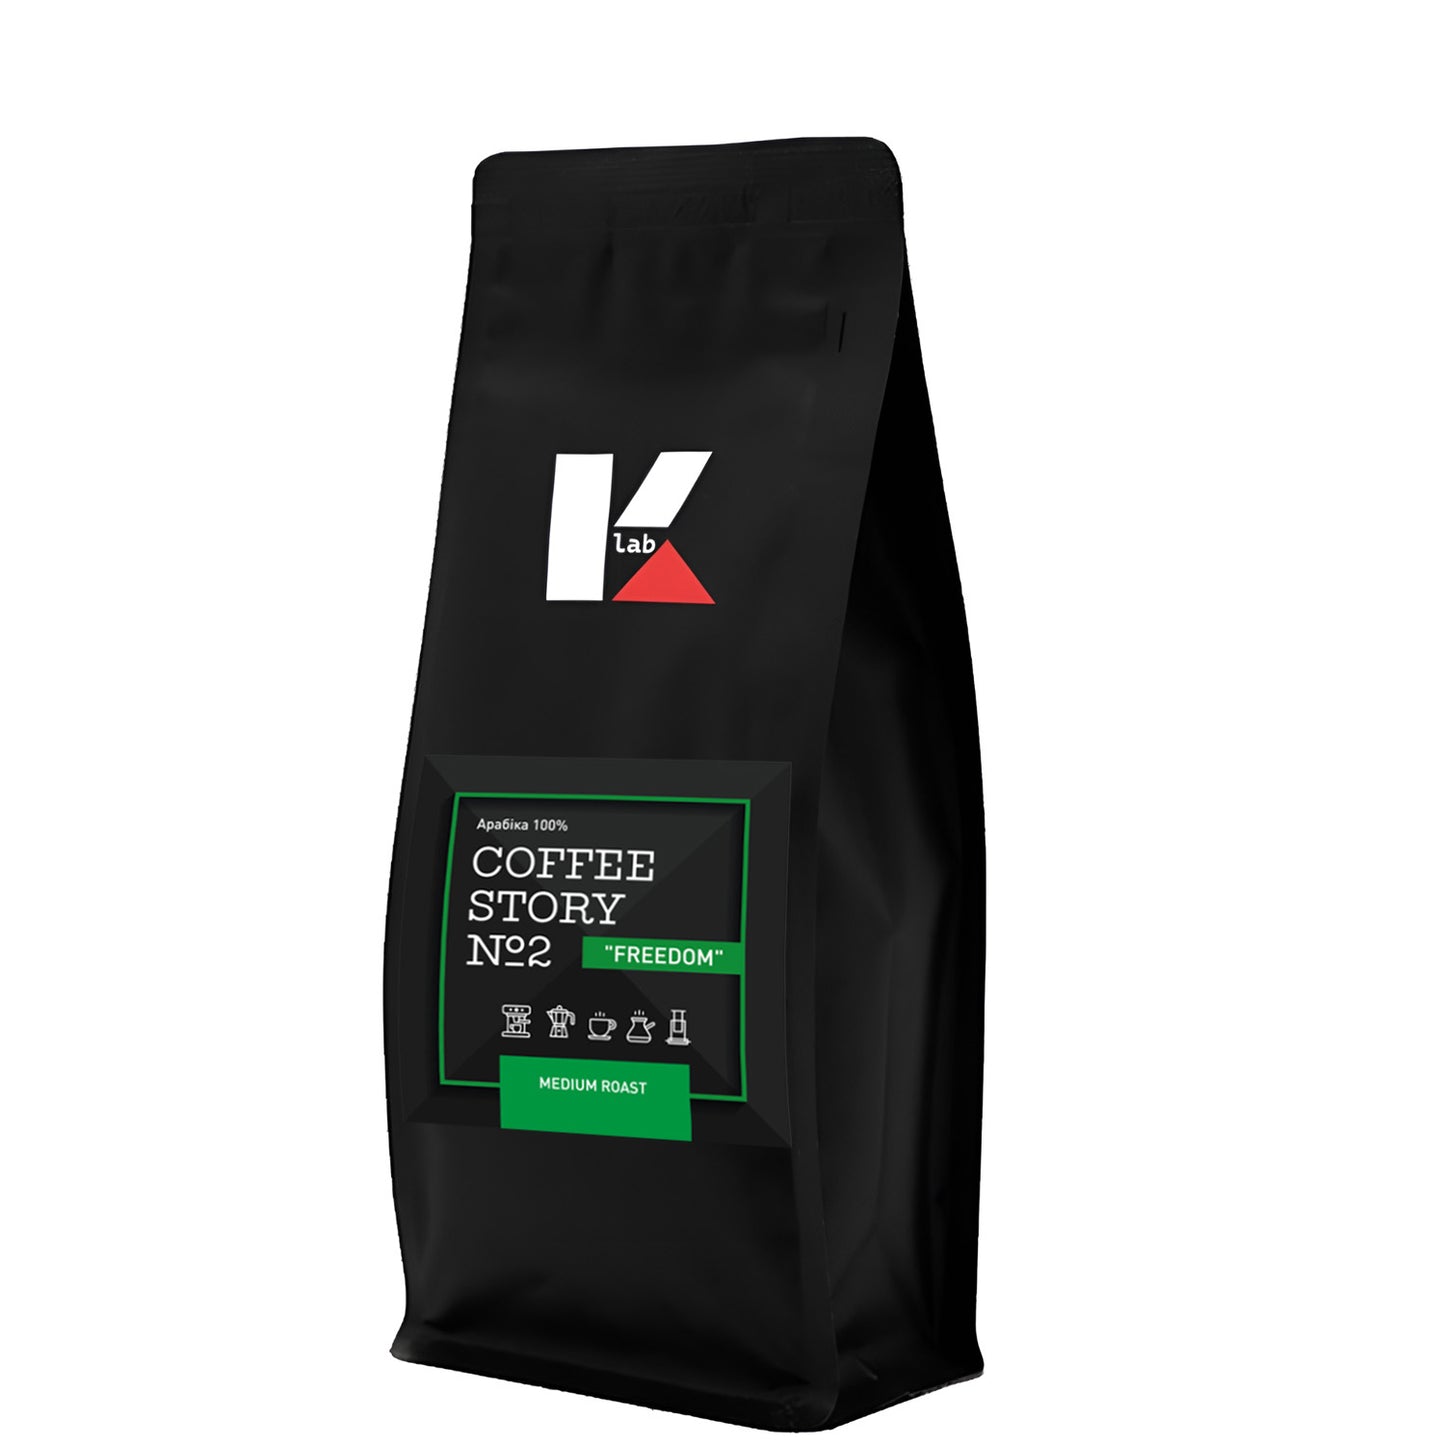 COFFEE STORY №2 - Klab (1kg front)